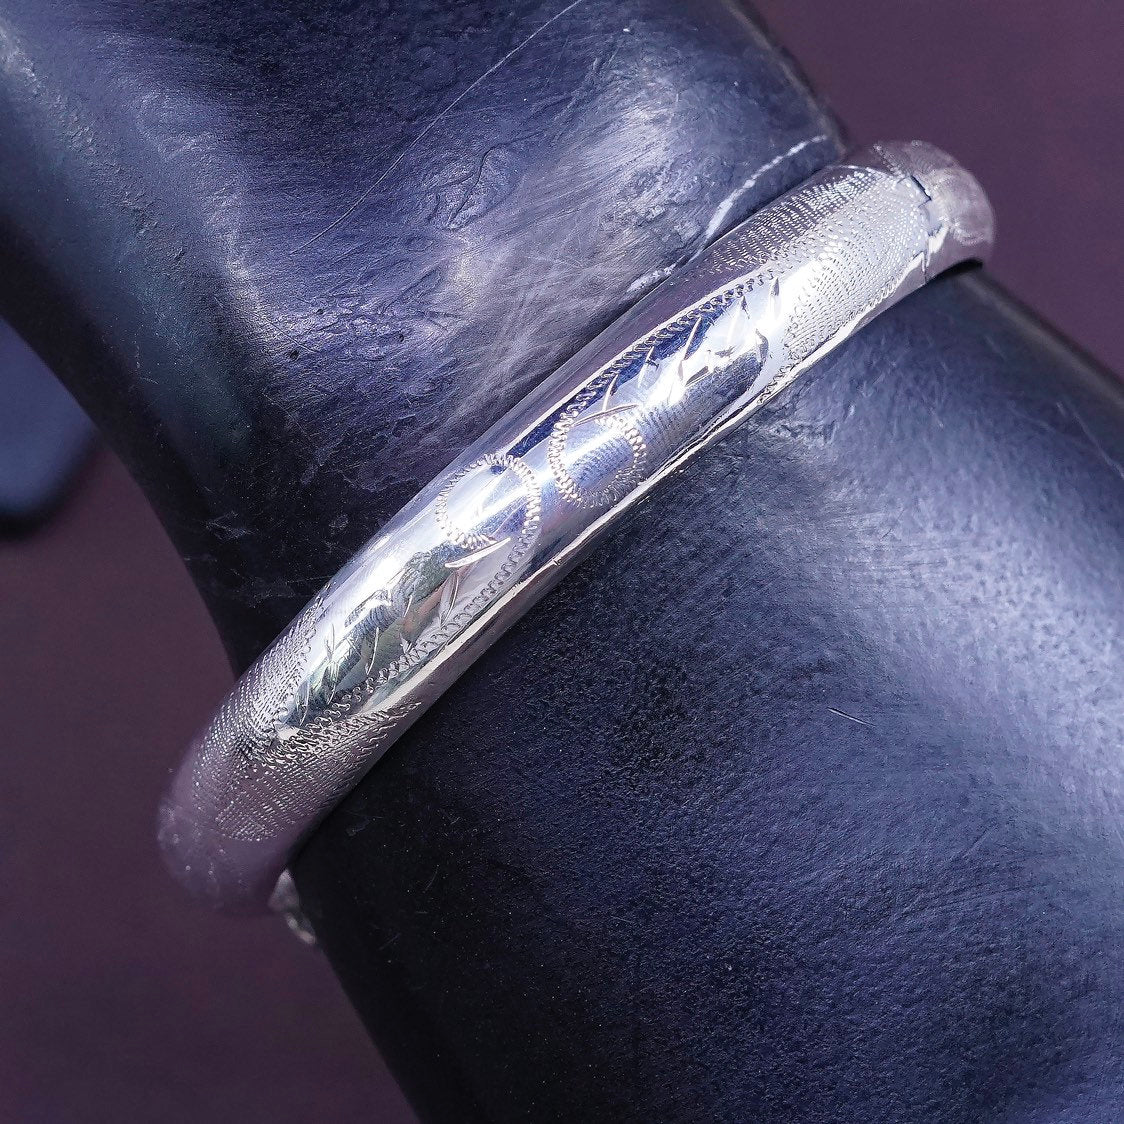 7.25", vtg Sterling silver handmade bracelet, 925 hinged bangle w/ secure chain